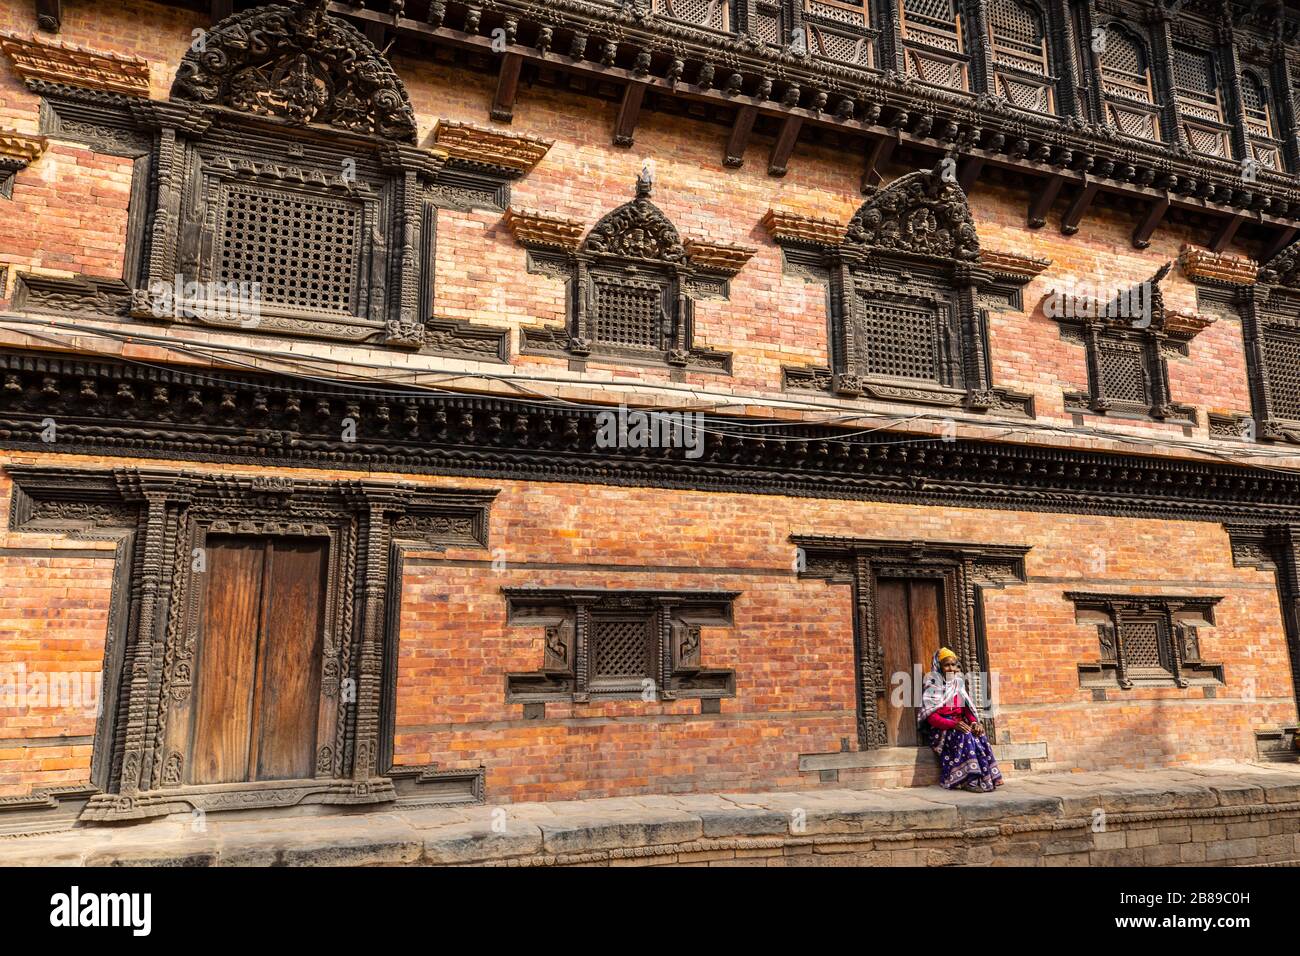 55 Windows Palace in Bhaktapur Durbar Square, Nepal Stock Photo